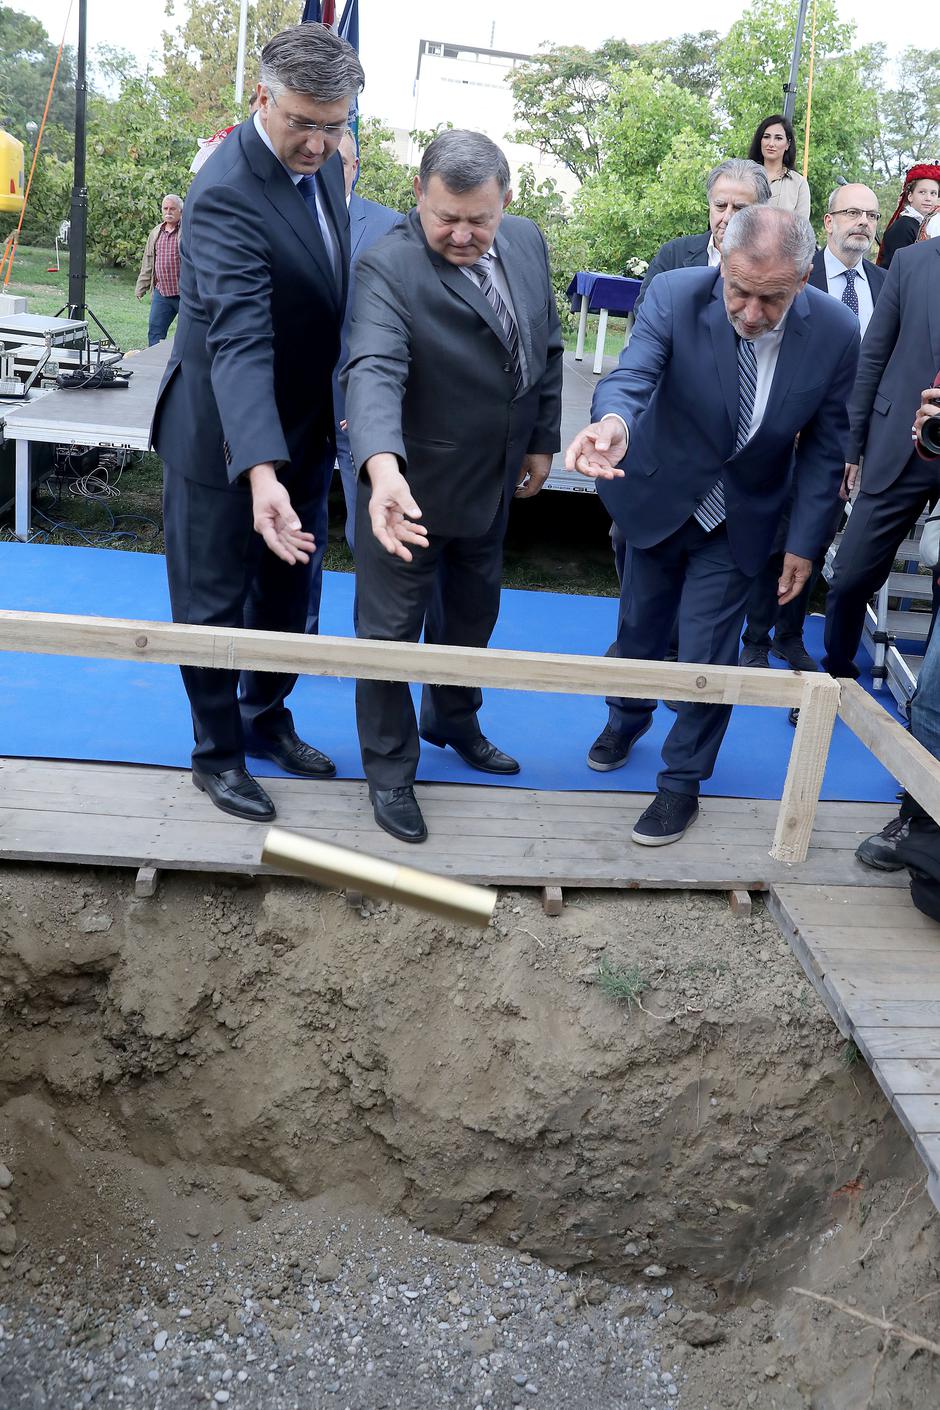 Milan Bandić, Mladen Markač i Andrej Plenković na postavljanju kamena temeljca Spomeniku domovini 2019. | Author: Patrik Macek/ PIXSELL